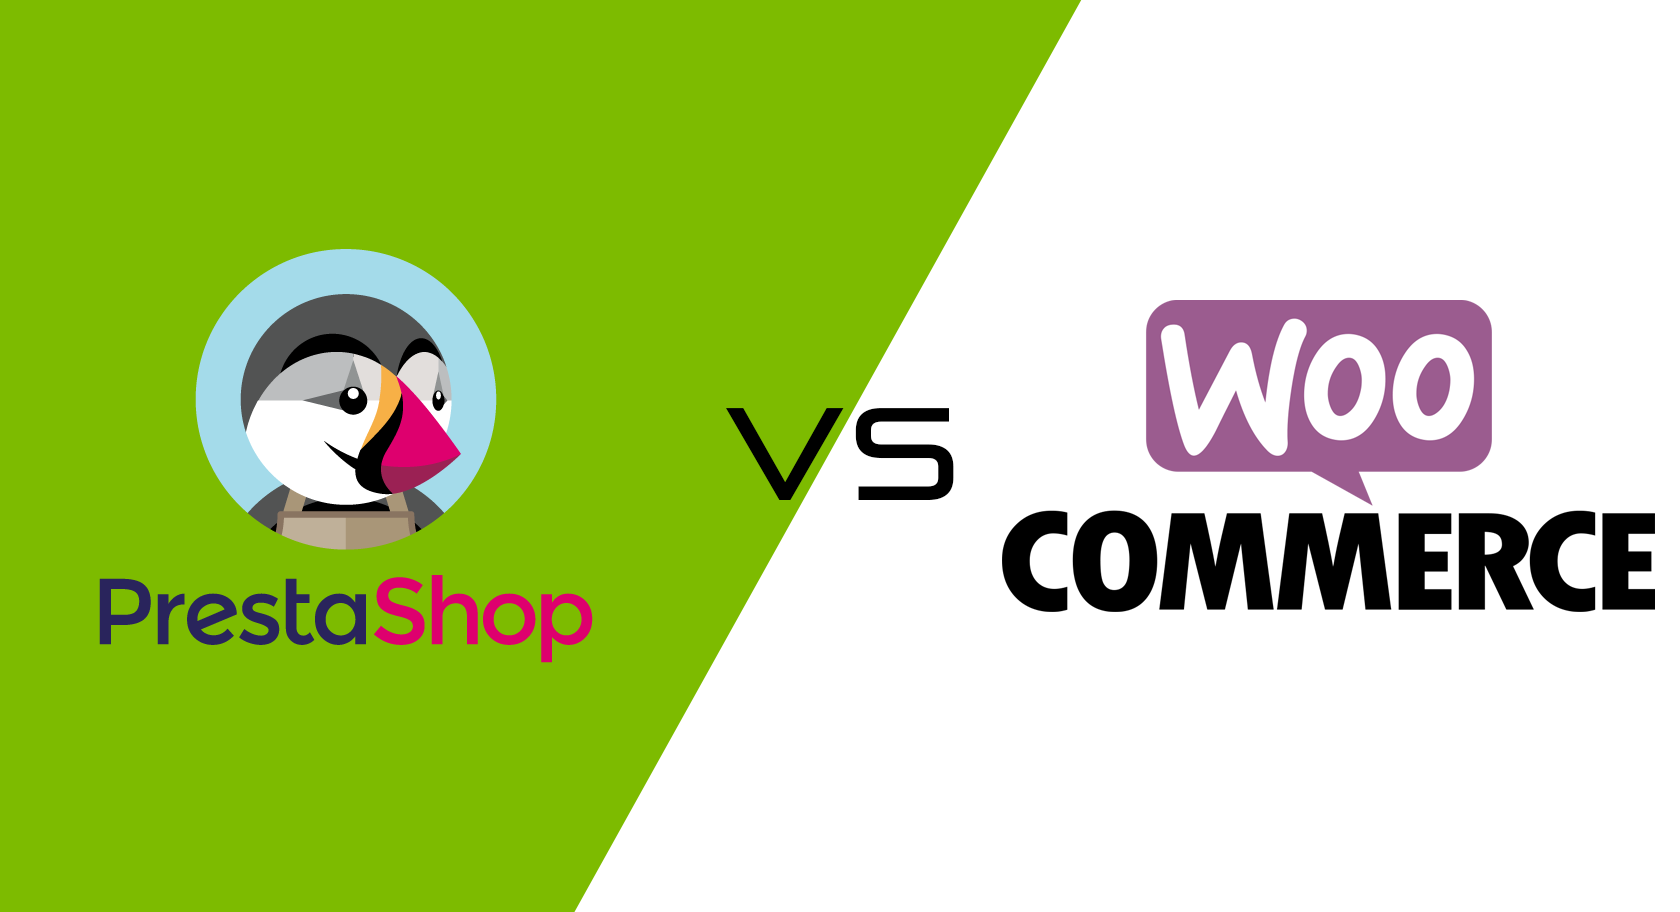 PrestaShop vs WooCommerce